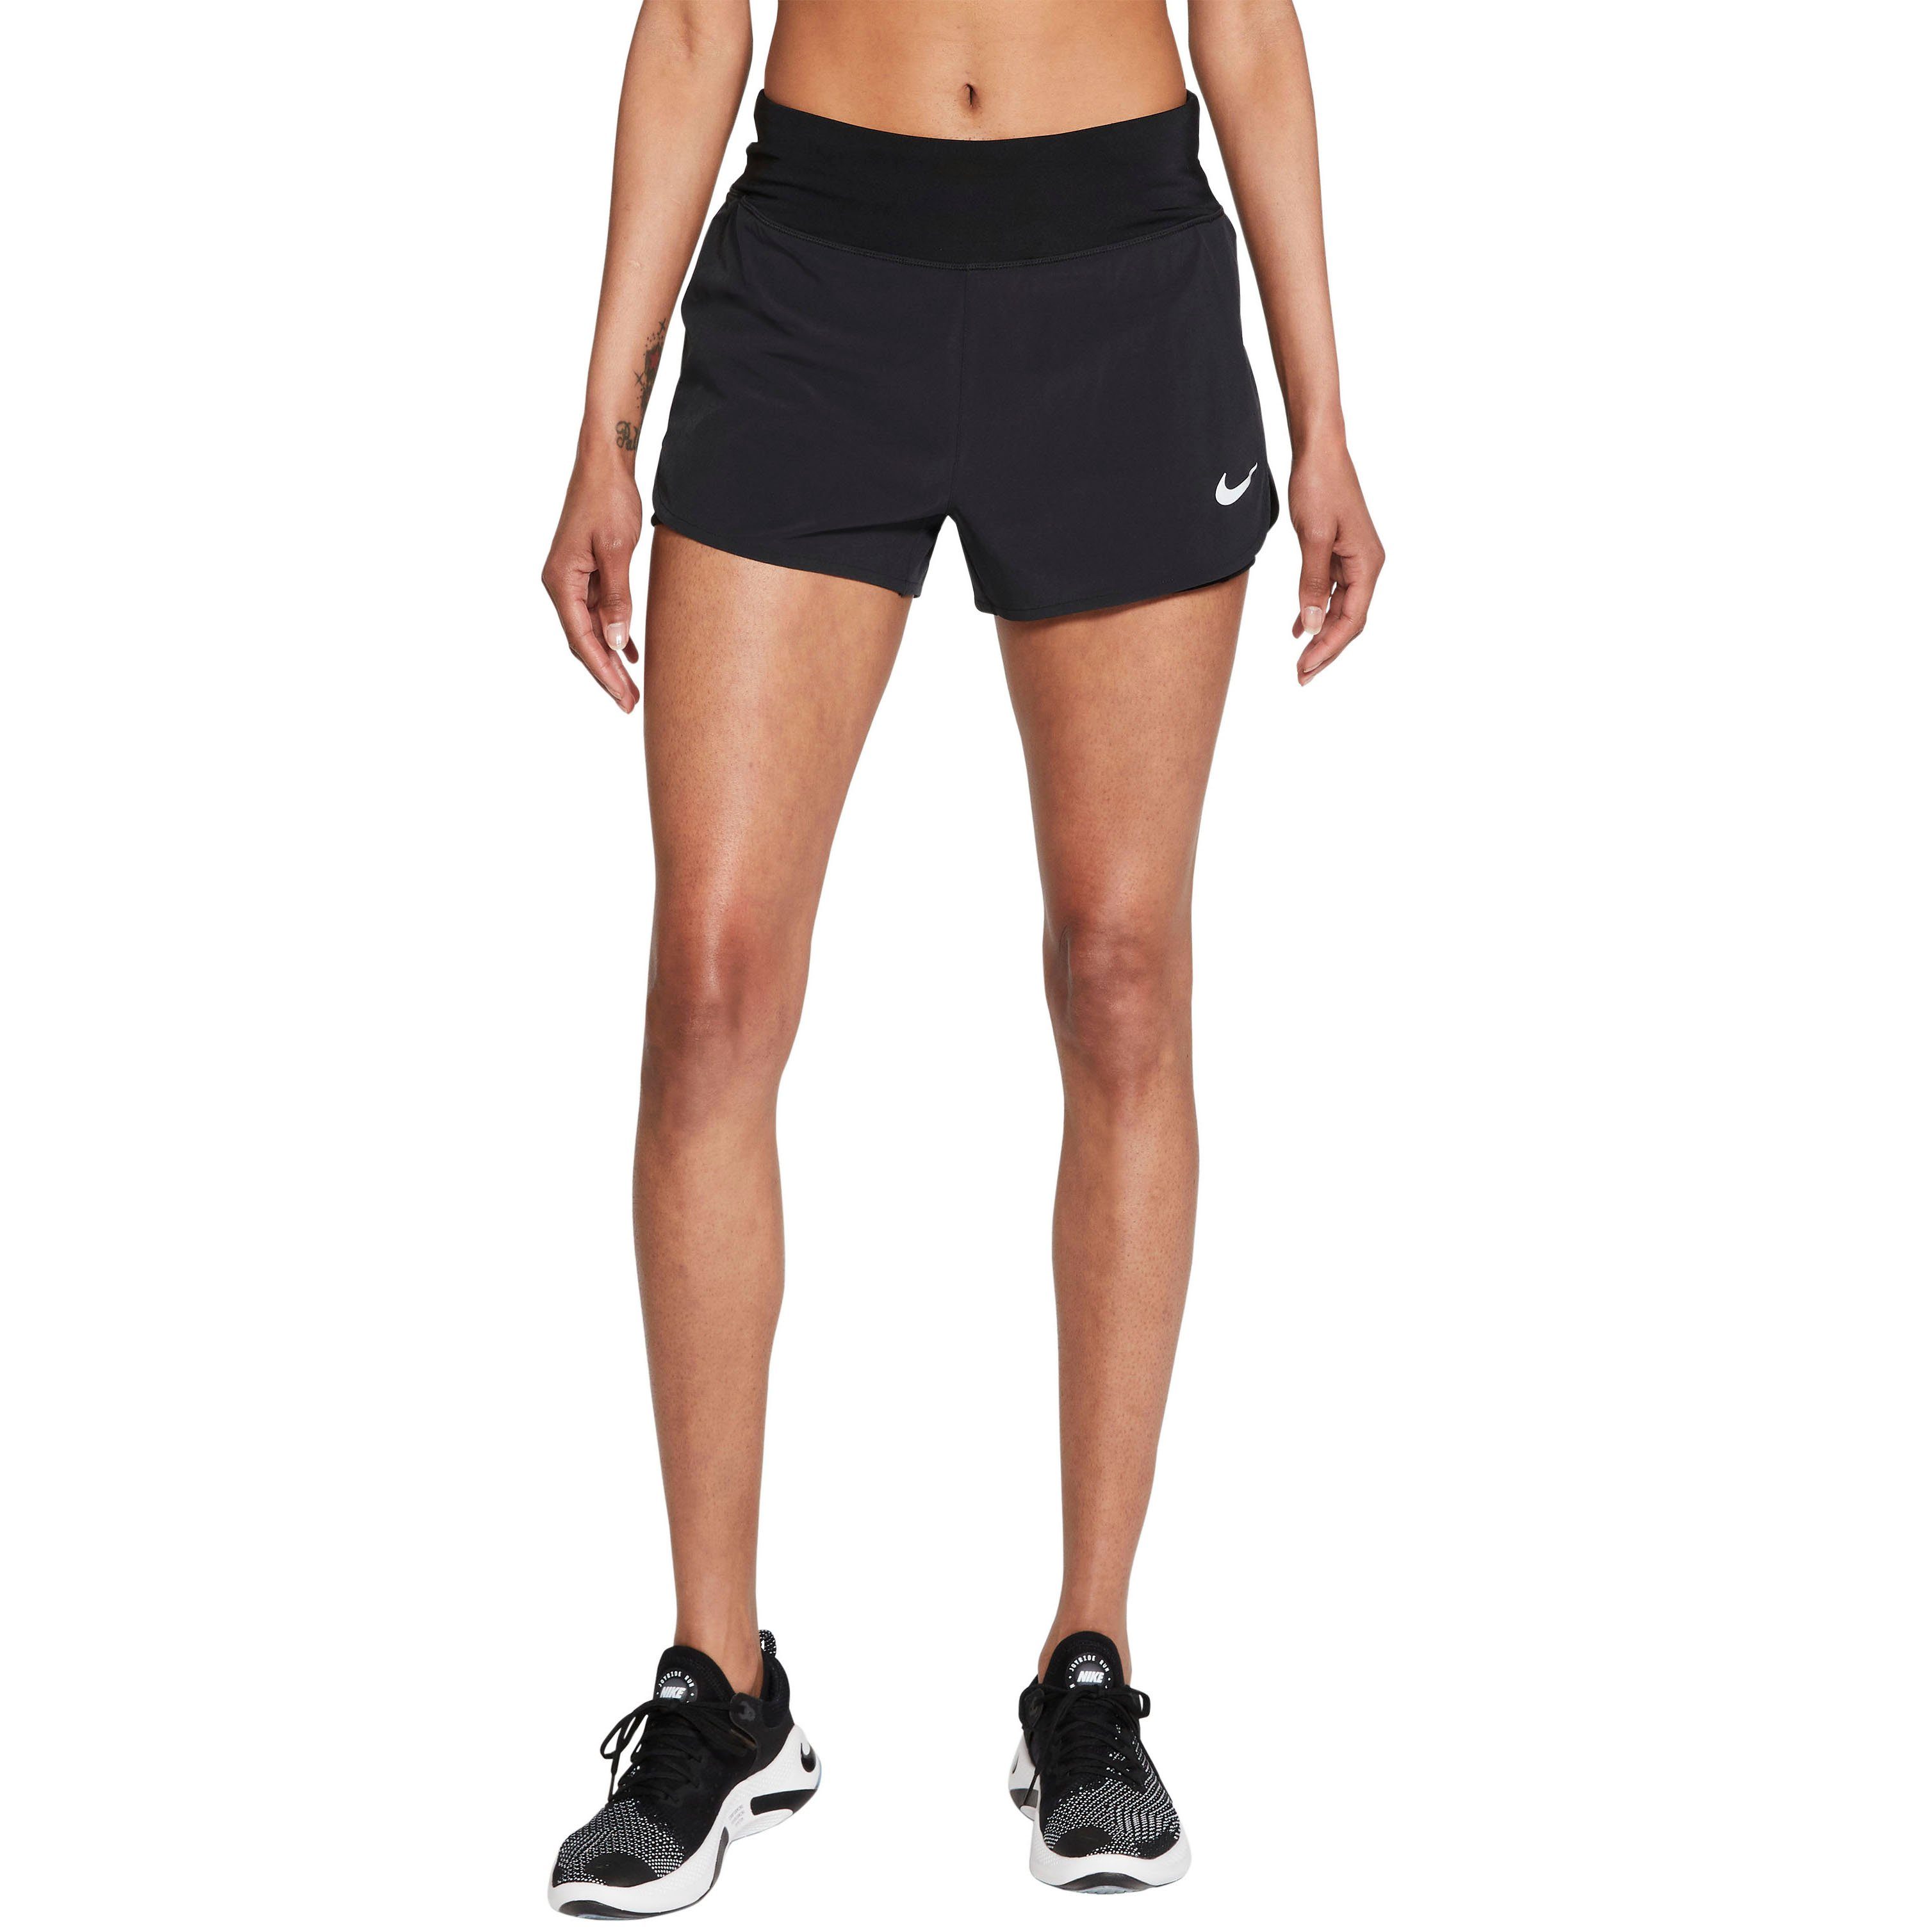 Nike Laufhosen Damen online kaufen | OTTO